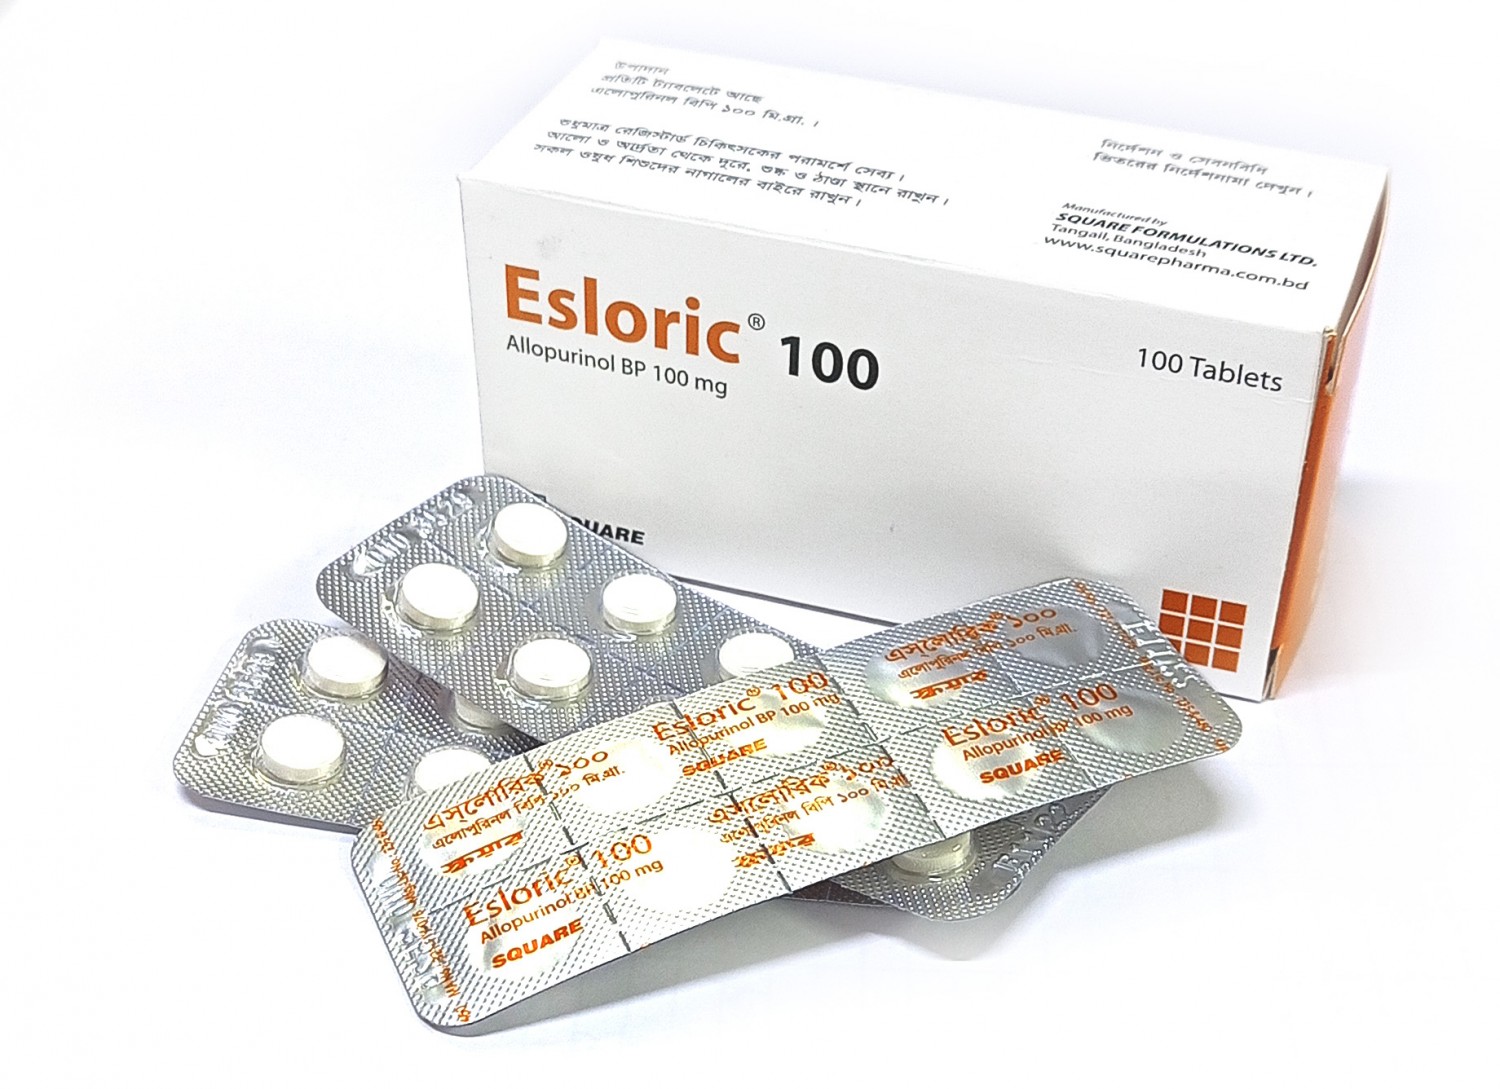 Esloric 100 mg Tablet – 10’s strip